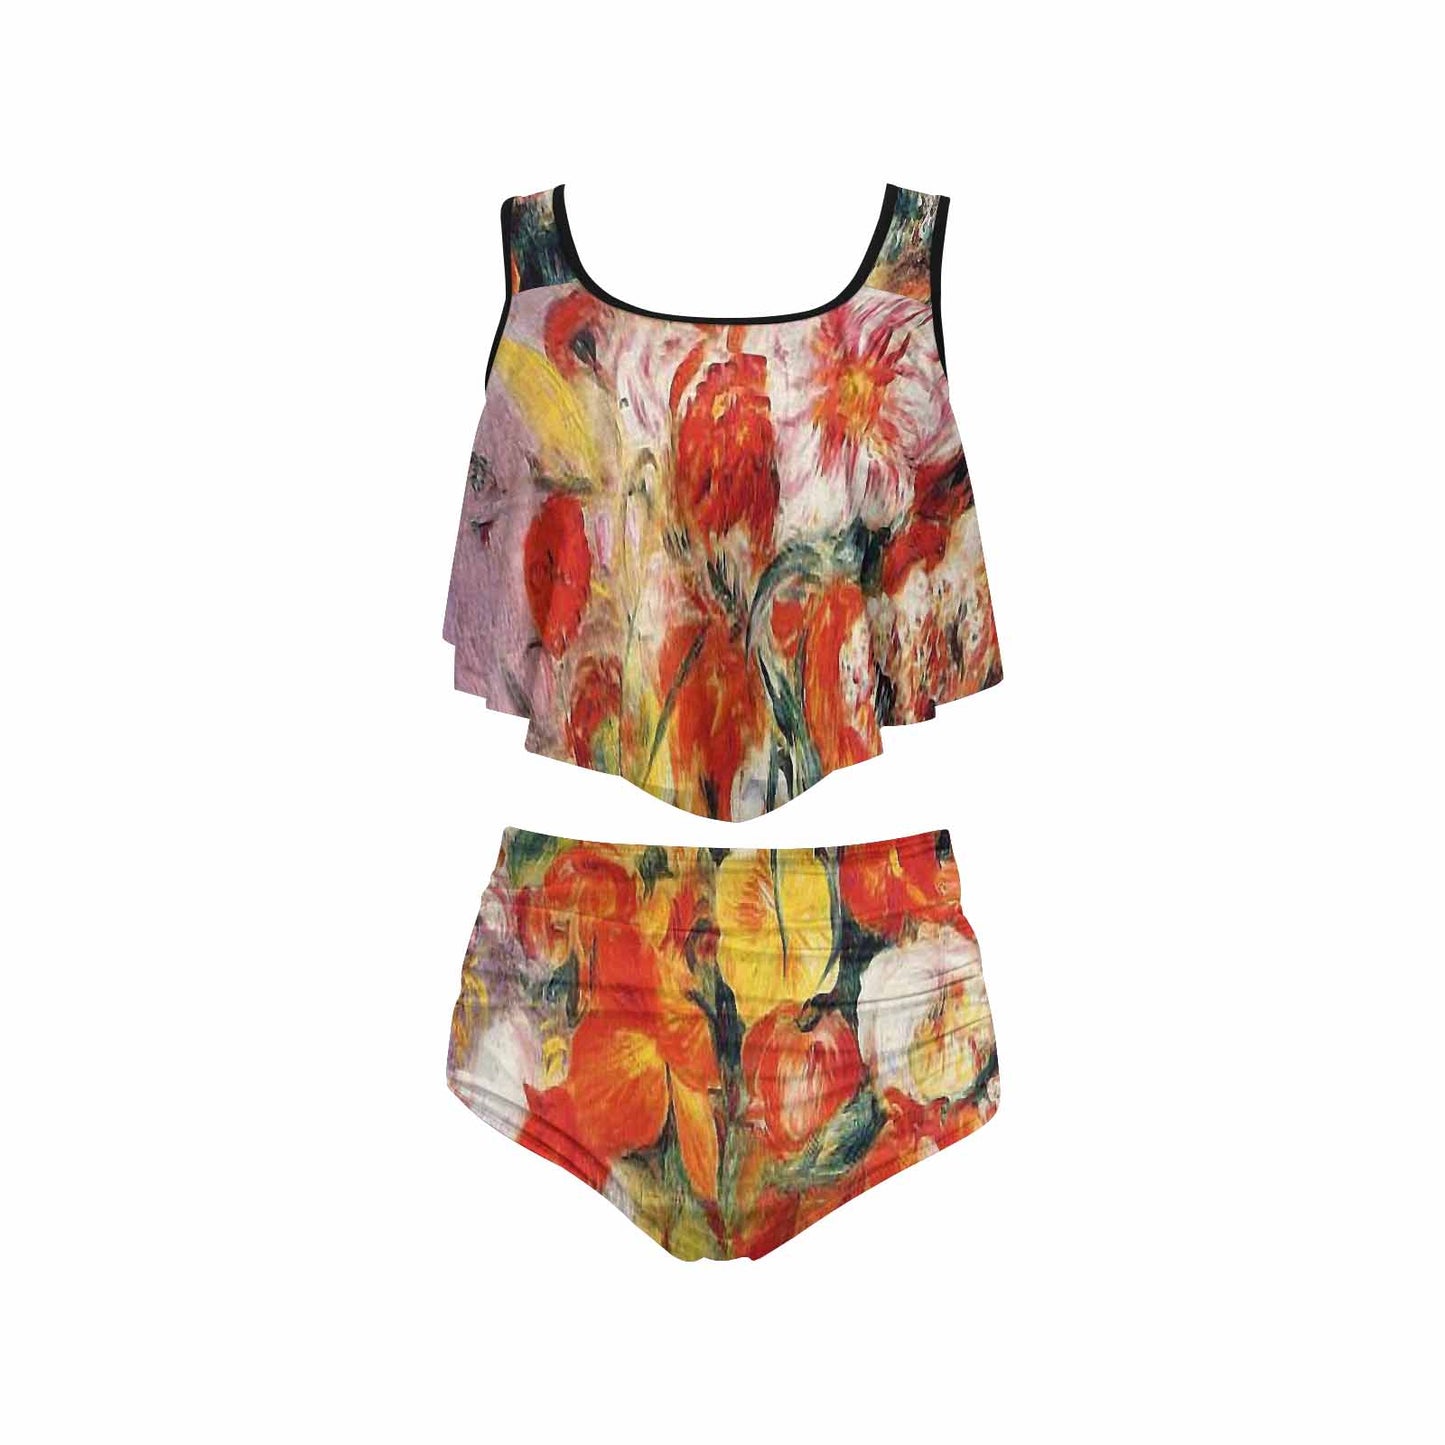 Vintage floral high waisted flounce top bikini, swim wear, Design 19